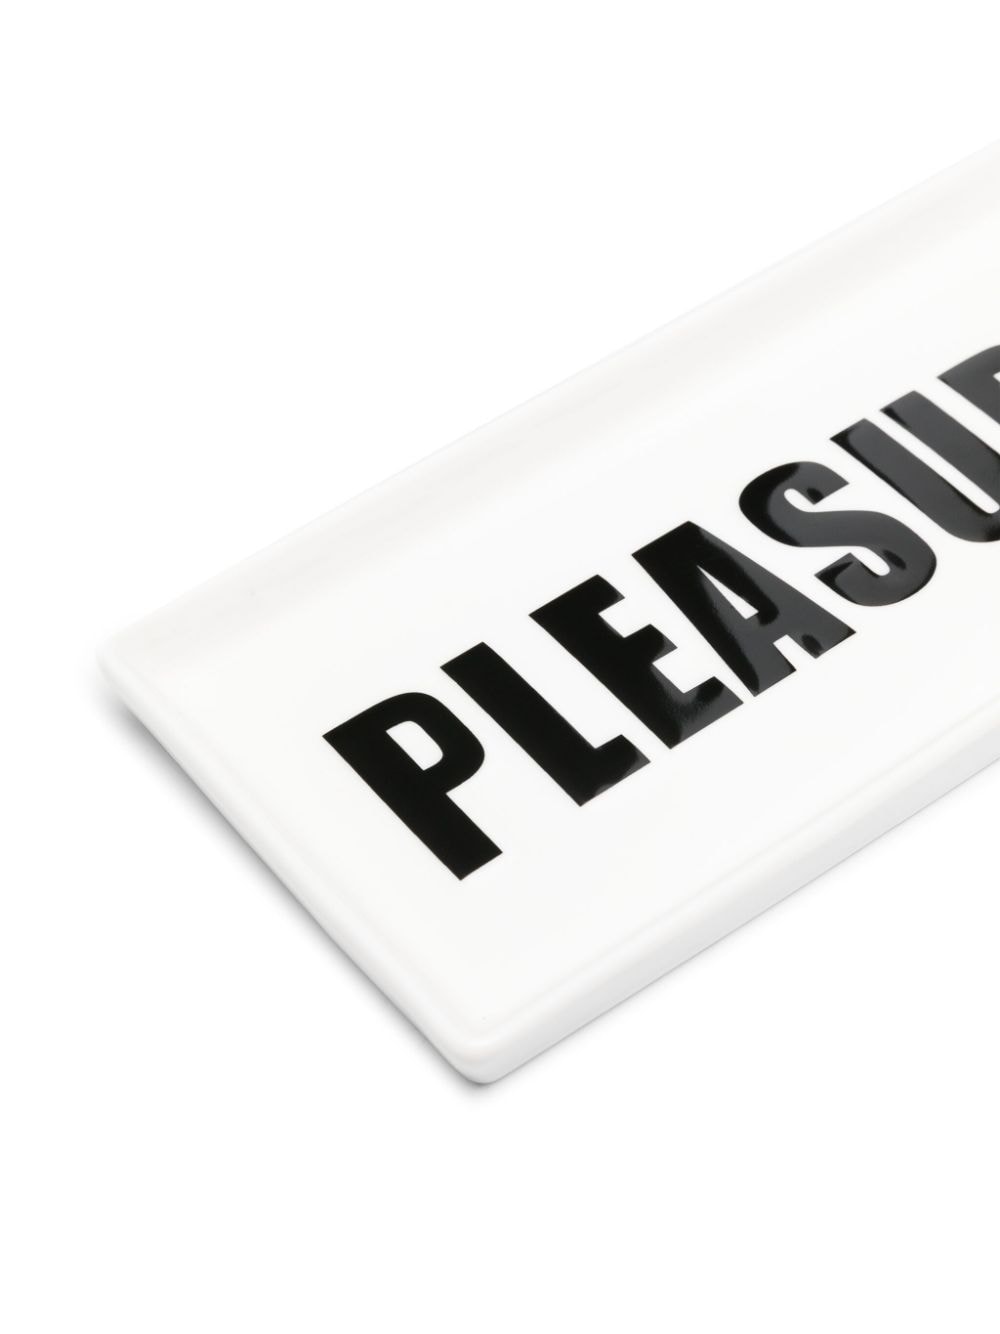 Pleasures PLEASURES- Logo Ceramic Tray